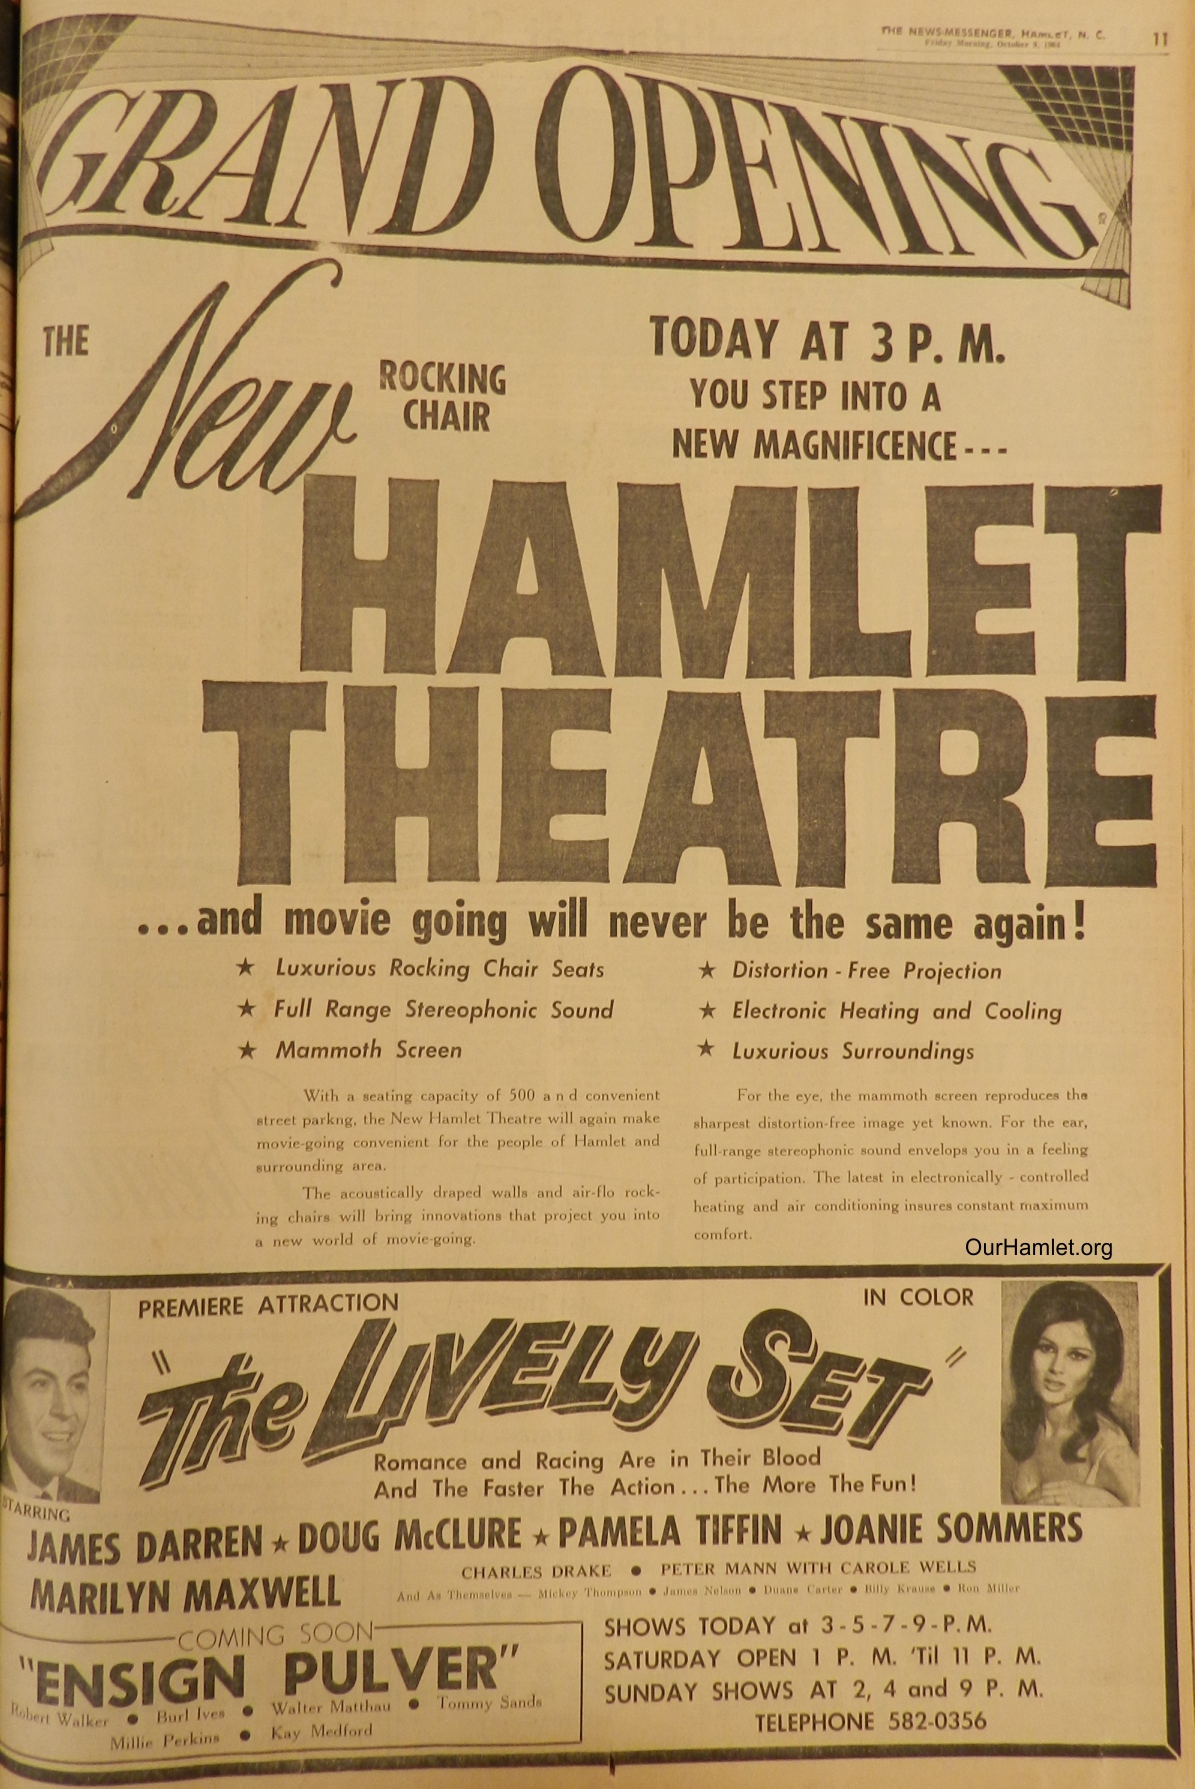 1964 Hamlet Theater Grand Opening OH.jpg